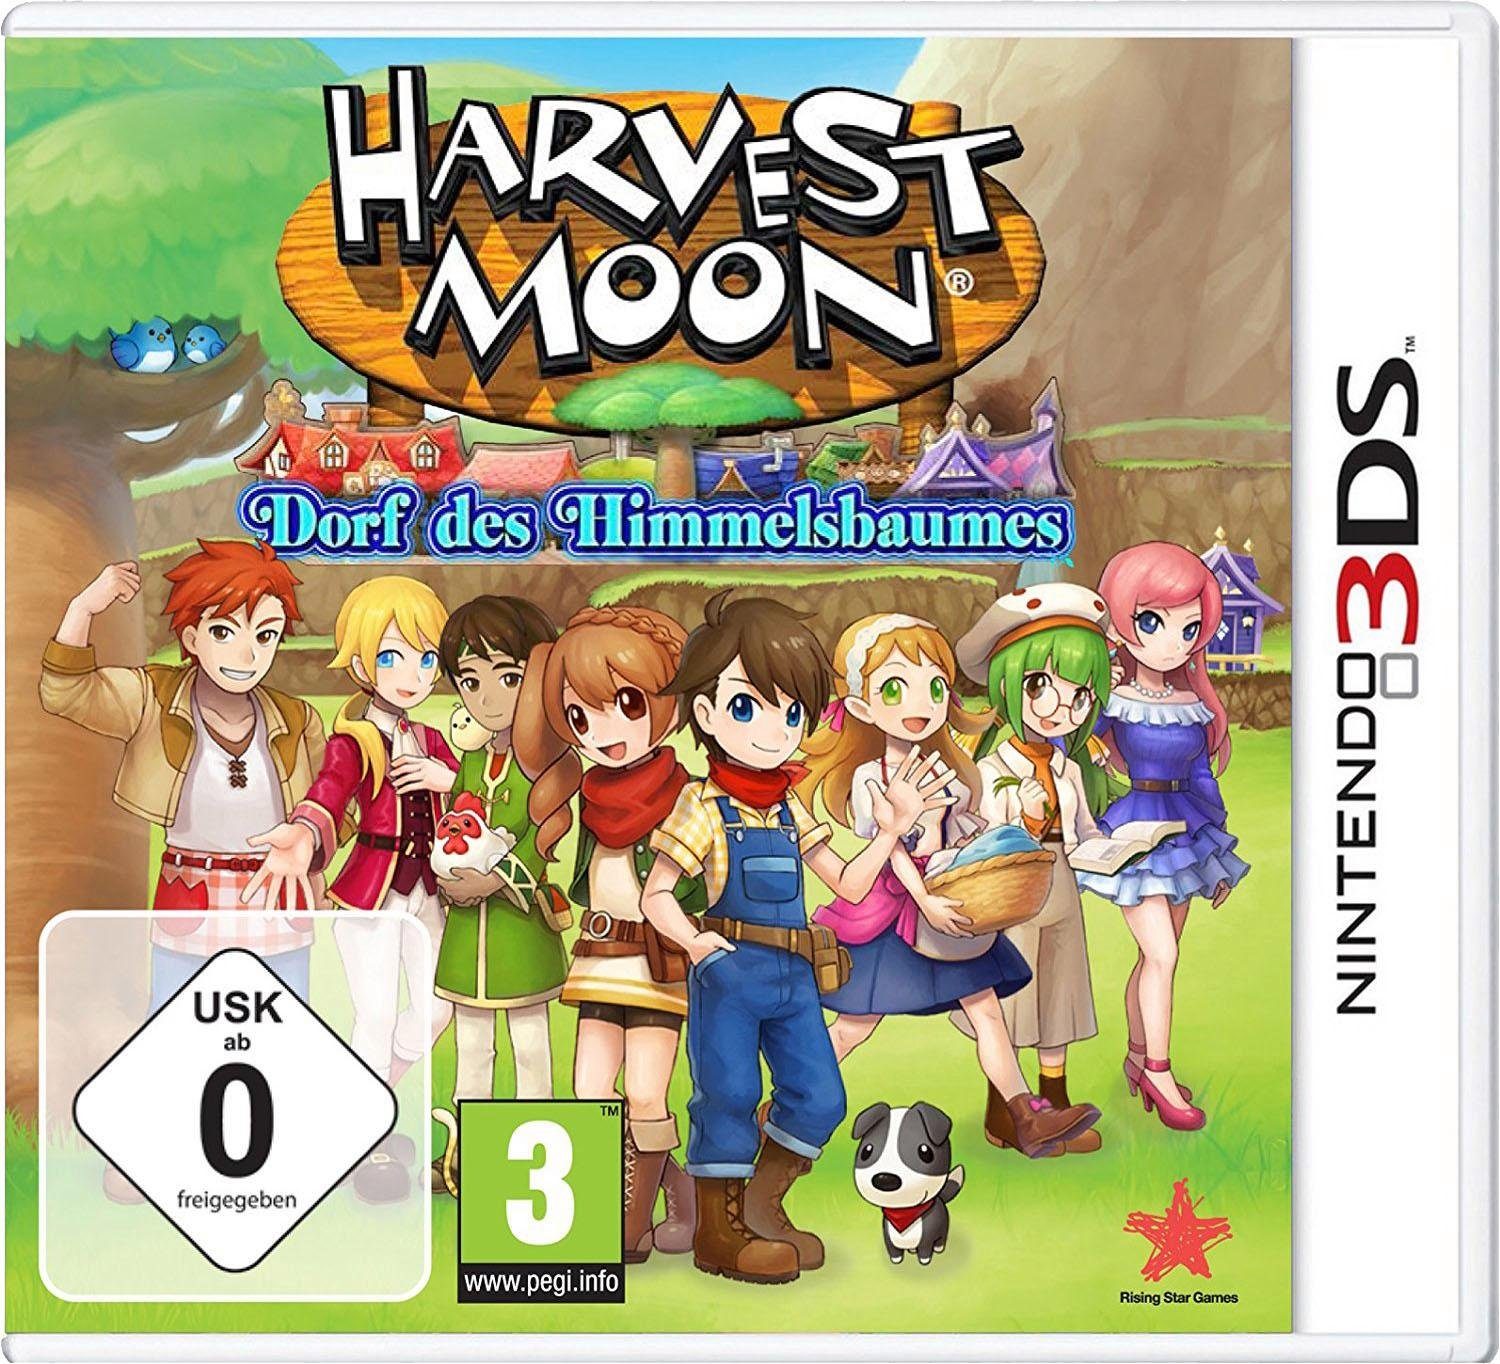 Nintendo Software Dorf 3DS, Pyramide des Moon: Himmelbaumes Harvest